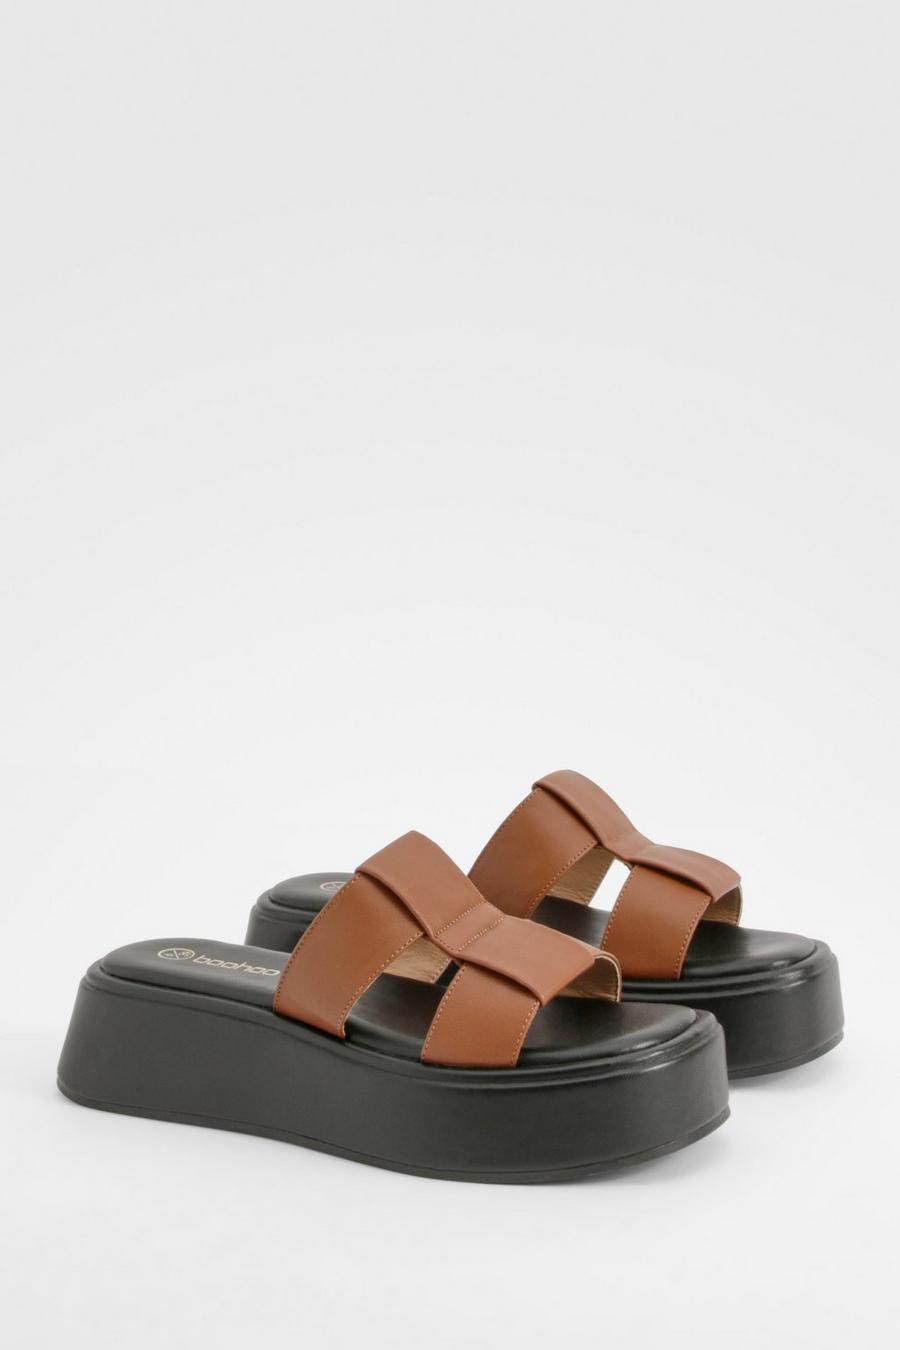 Tan Woven Slip On Flatform Sandals